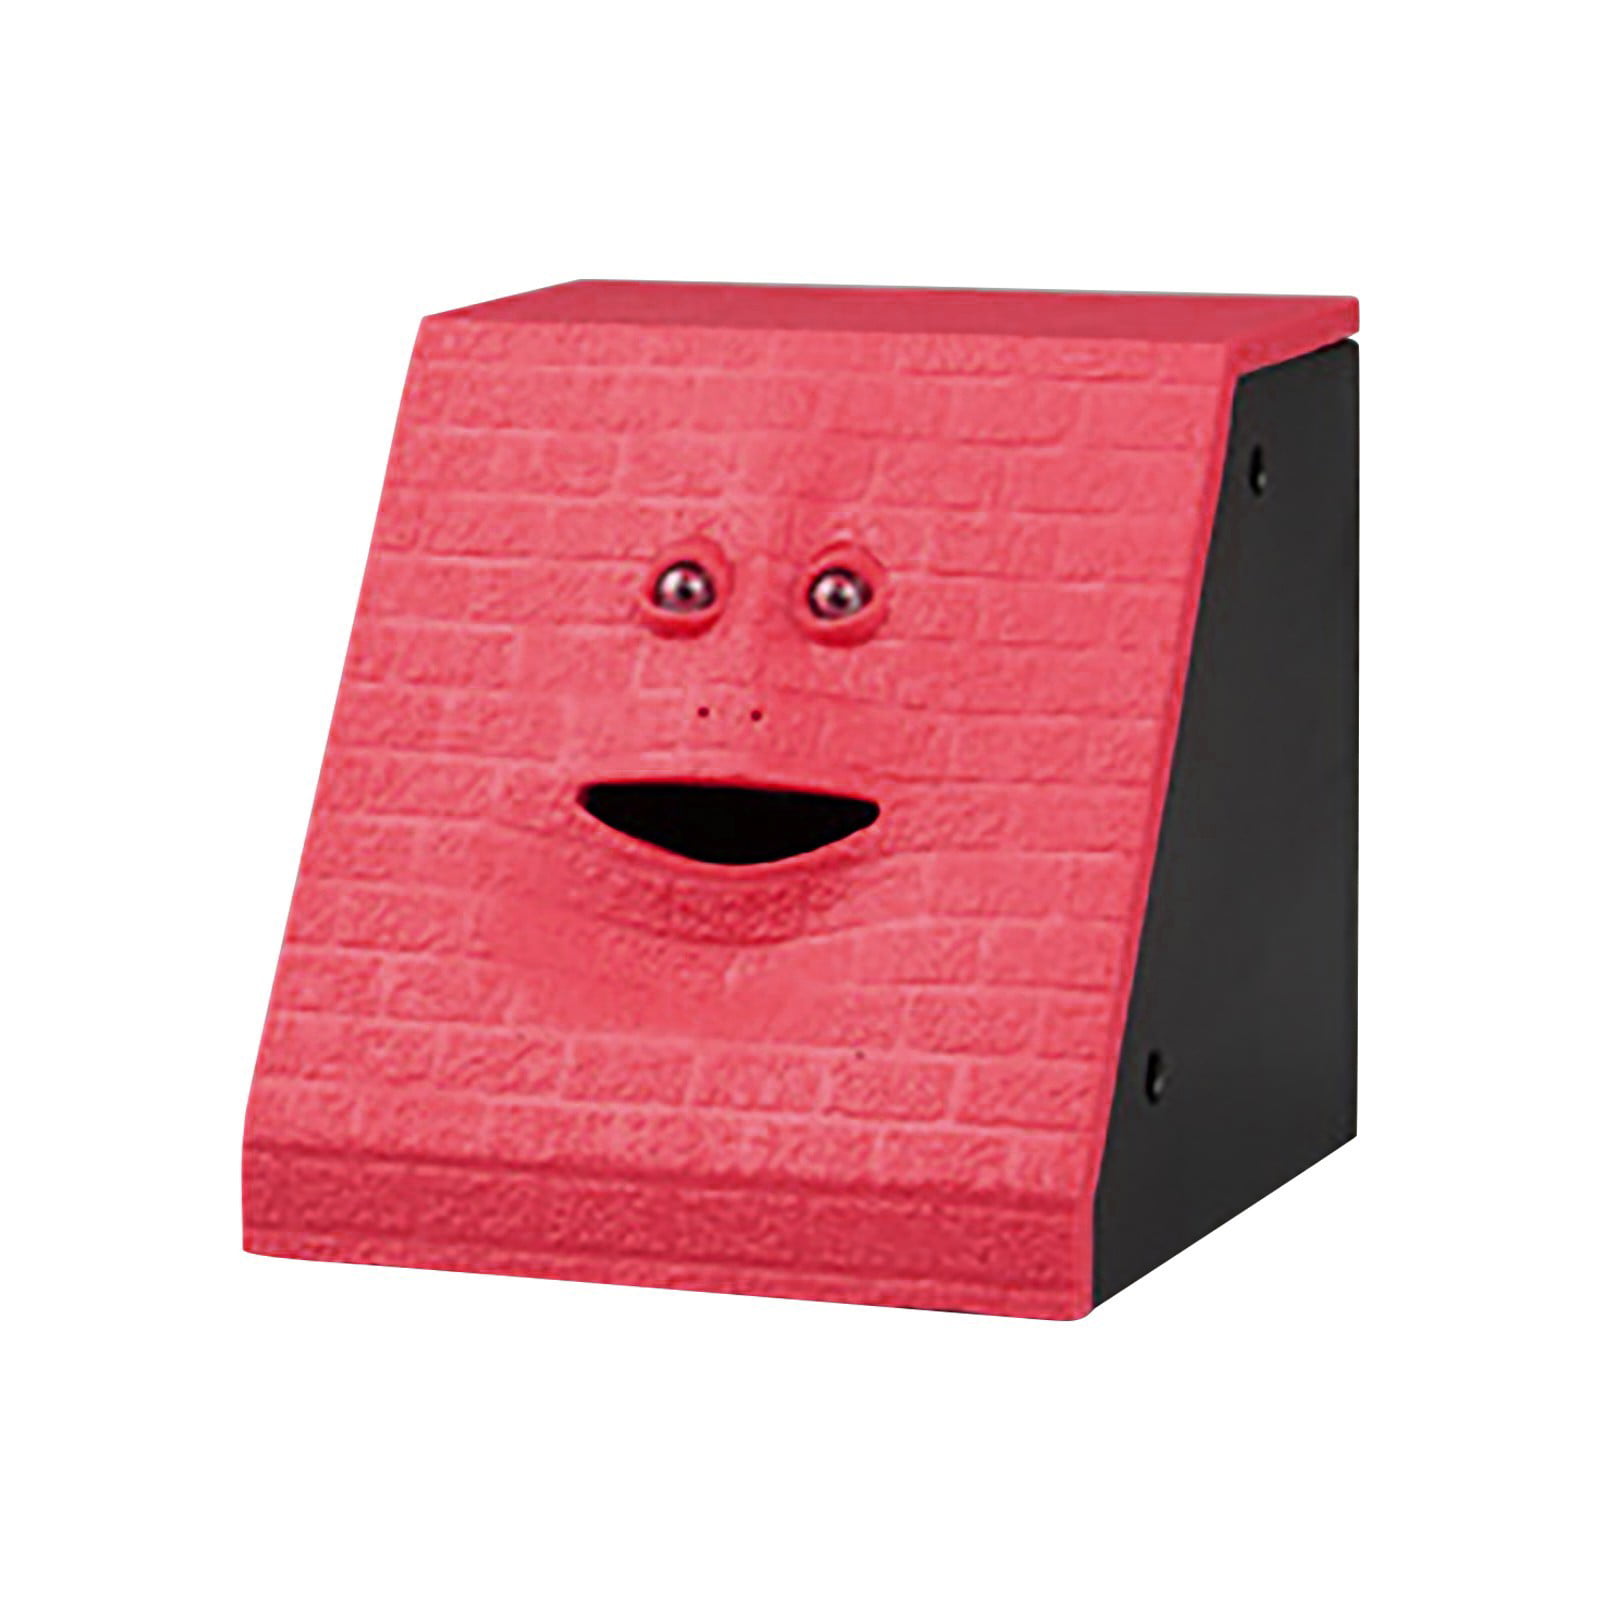 Funny Facebank Face Piggy Bank Sensor Coin Eating Saving Money Box Kids Gift New 